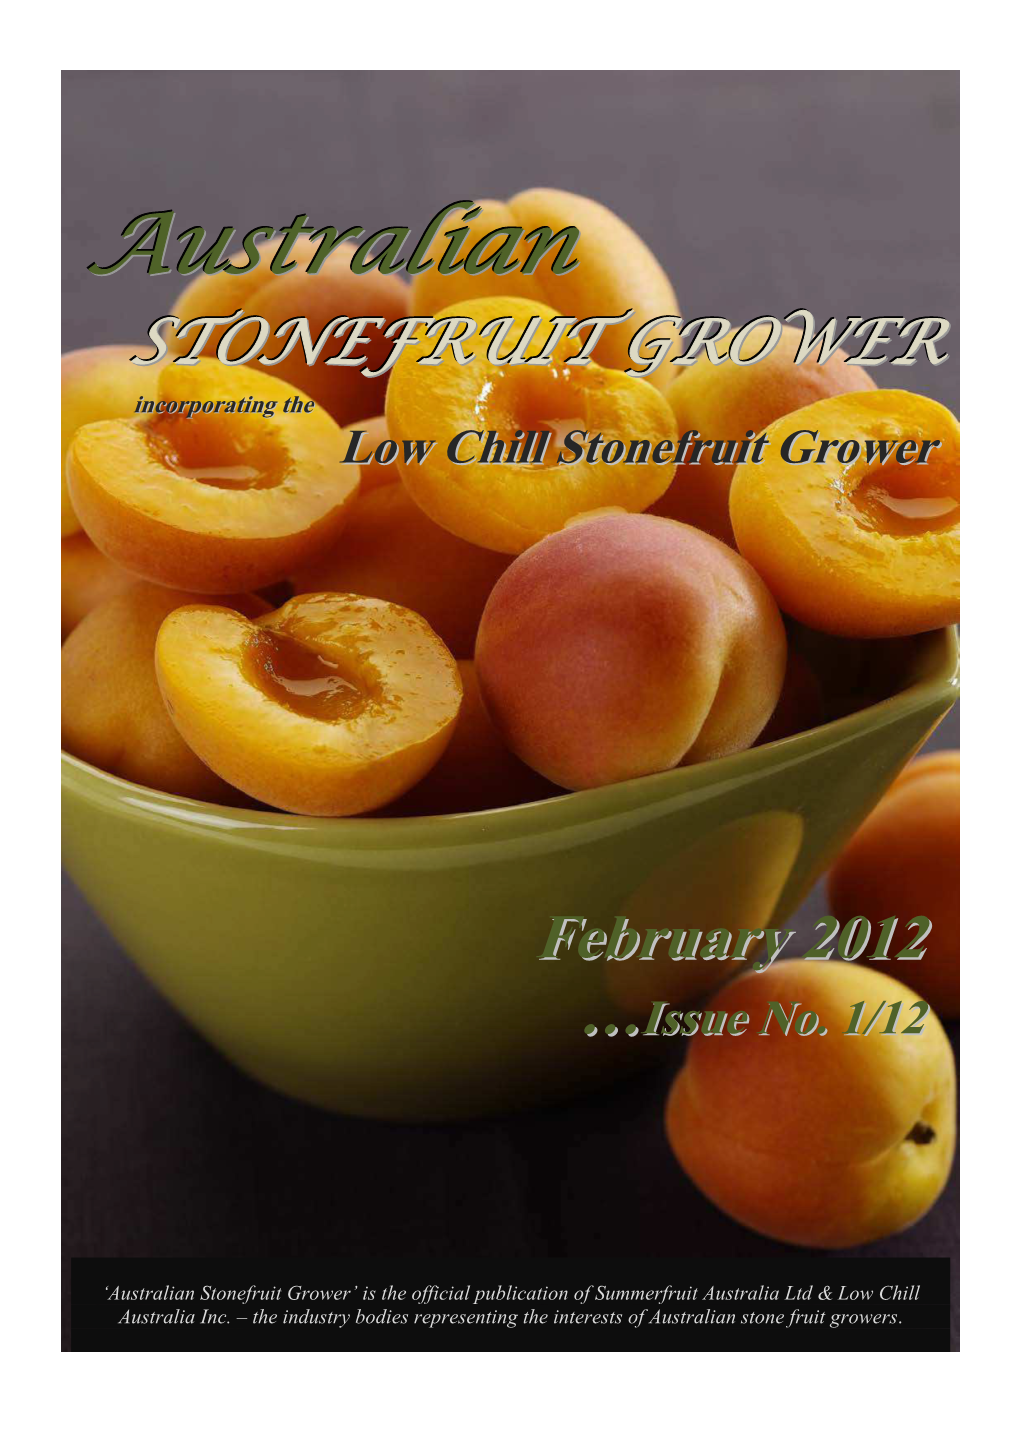 Australian Stonefruit Grower’ Is the Official Publication of Summerfruit Australia Ltd & Low Chill Australia Inc